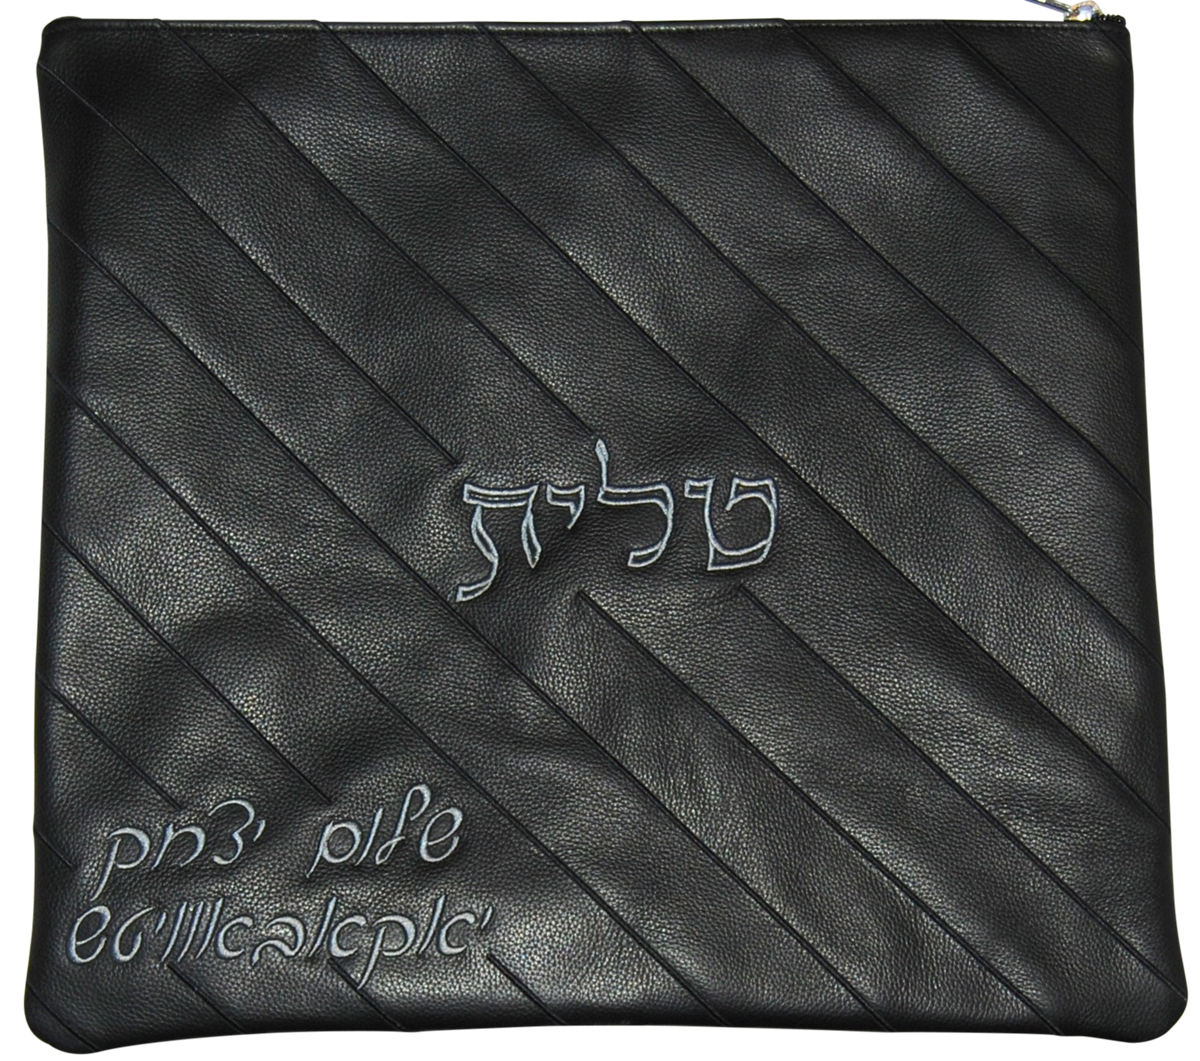 Black diagonal pinstripe design on black leather Tallis and Tefillin bag